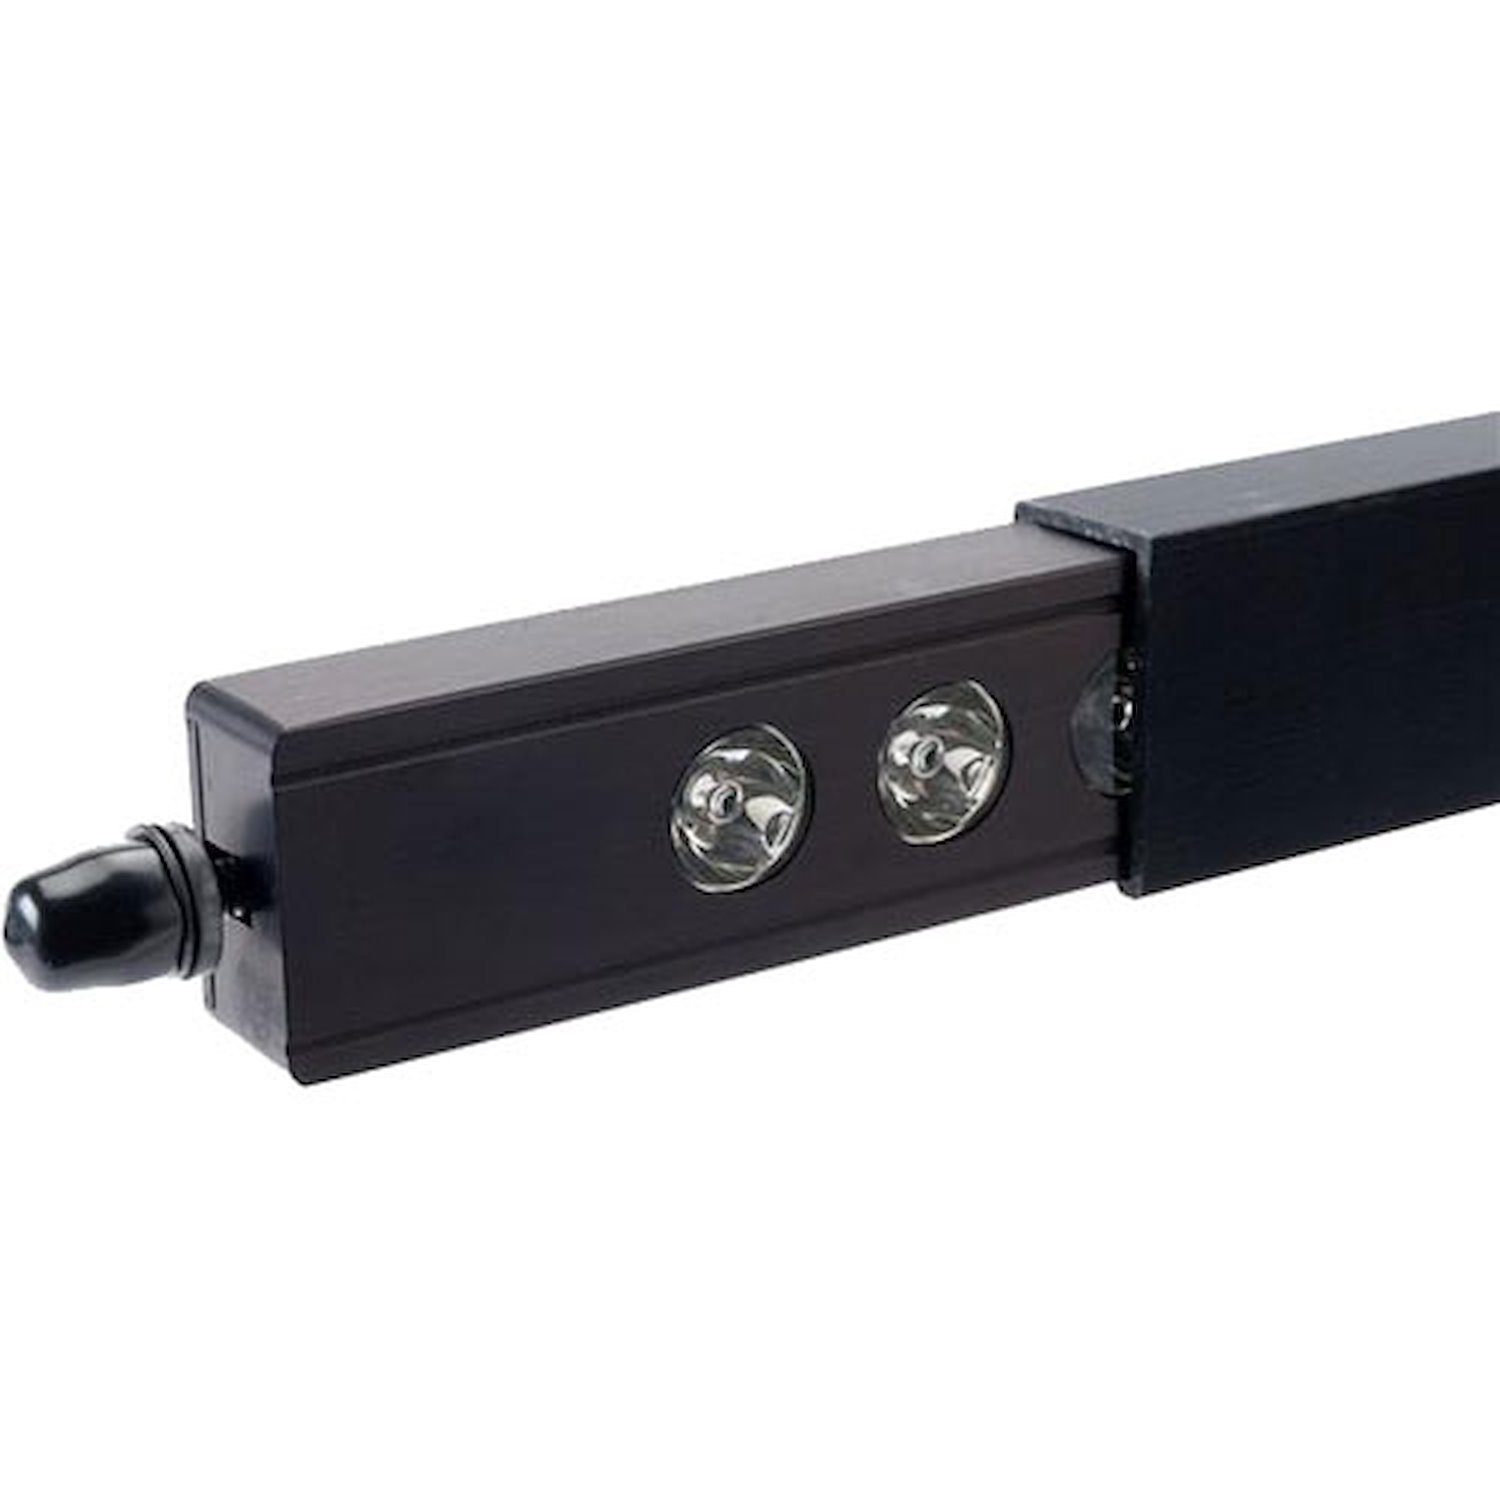 Luminix LED 50" Light Bar Wing Guard Fits 50" Curved or Straight Luminix Light Bars